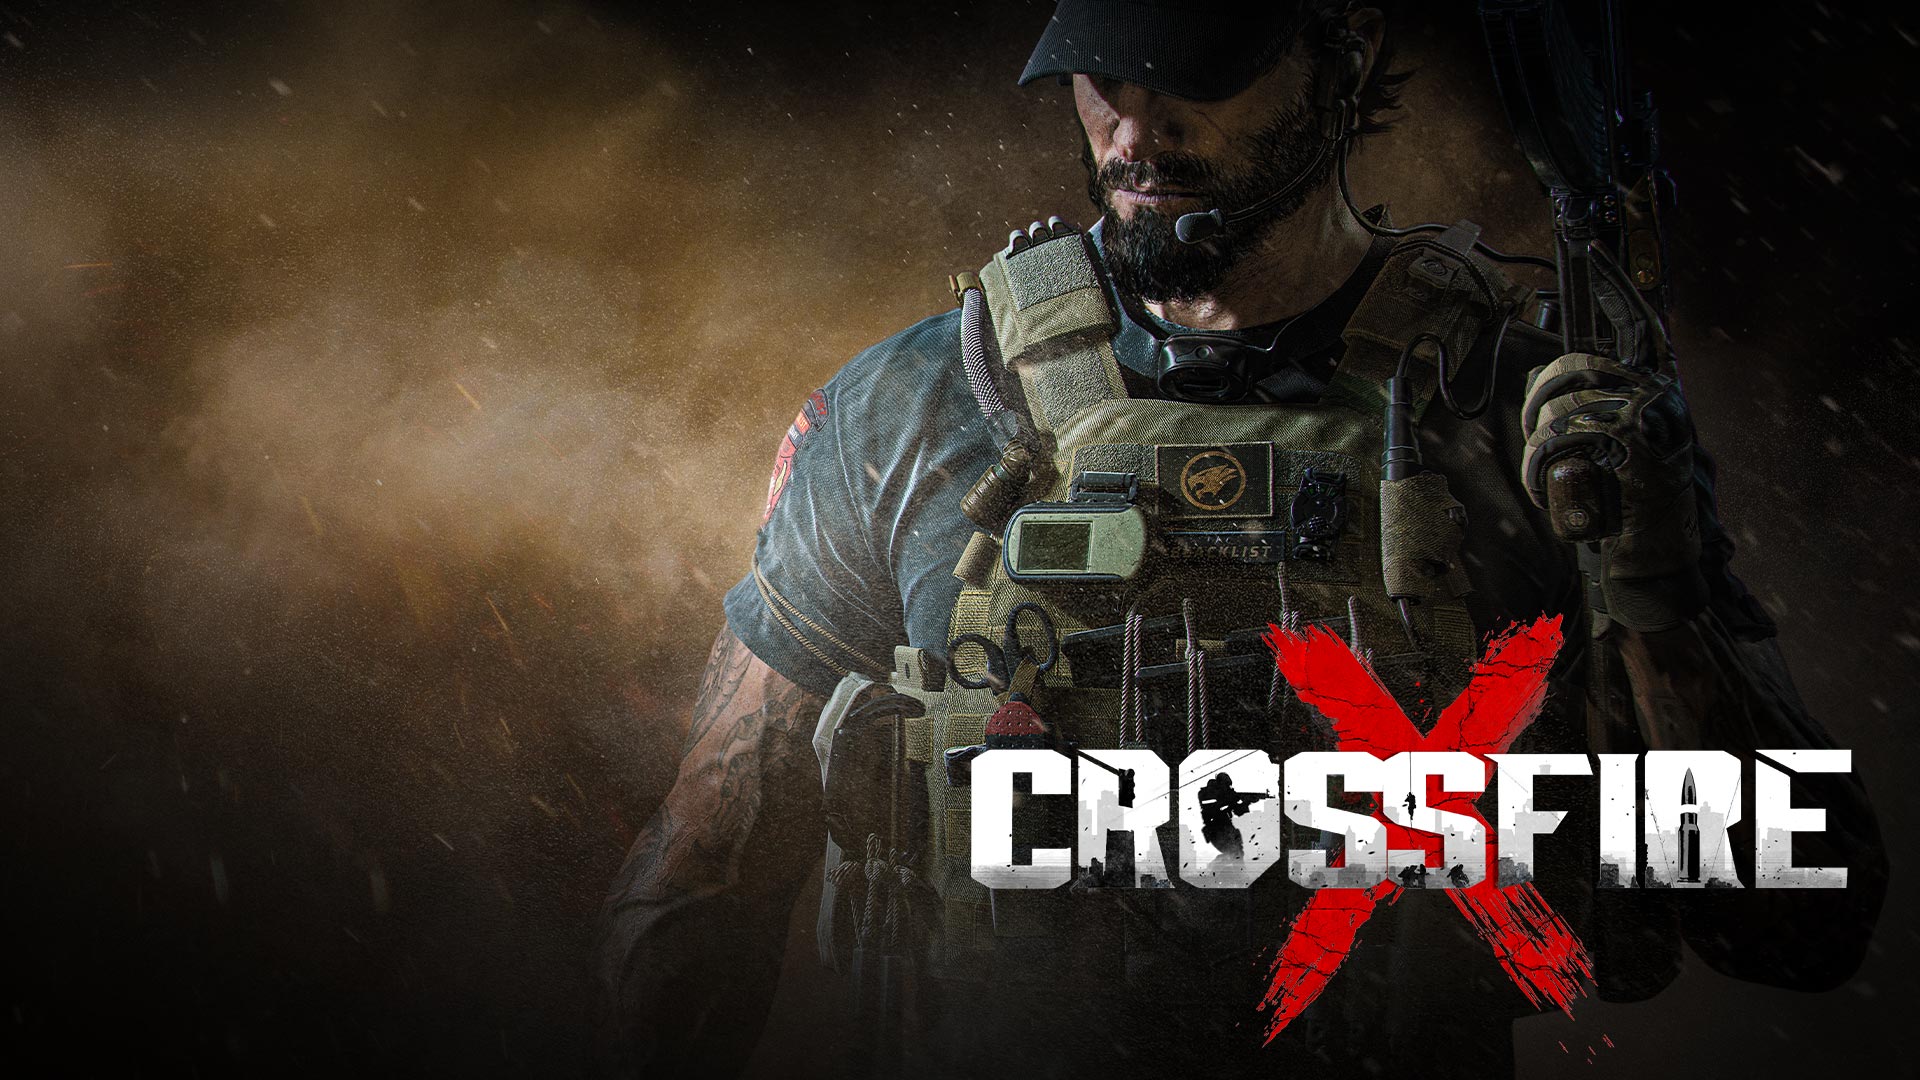 CrossfireX, Ένας βαριά οπλισμένος άνδρας στέκεται ανάμεσα σε καπνό και στάχτες